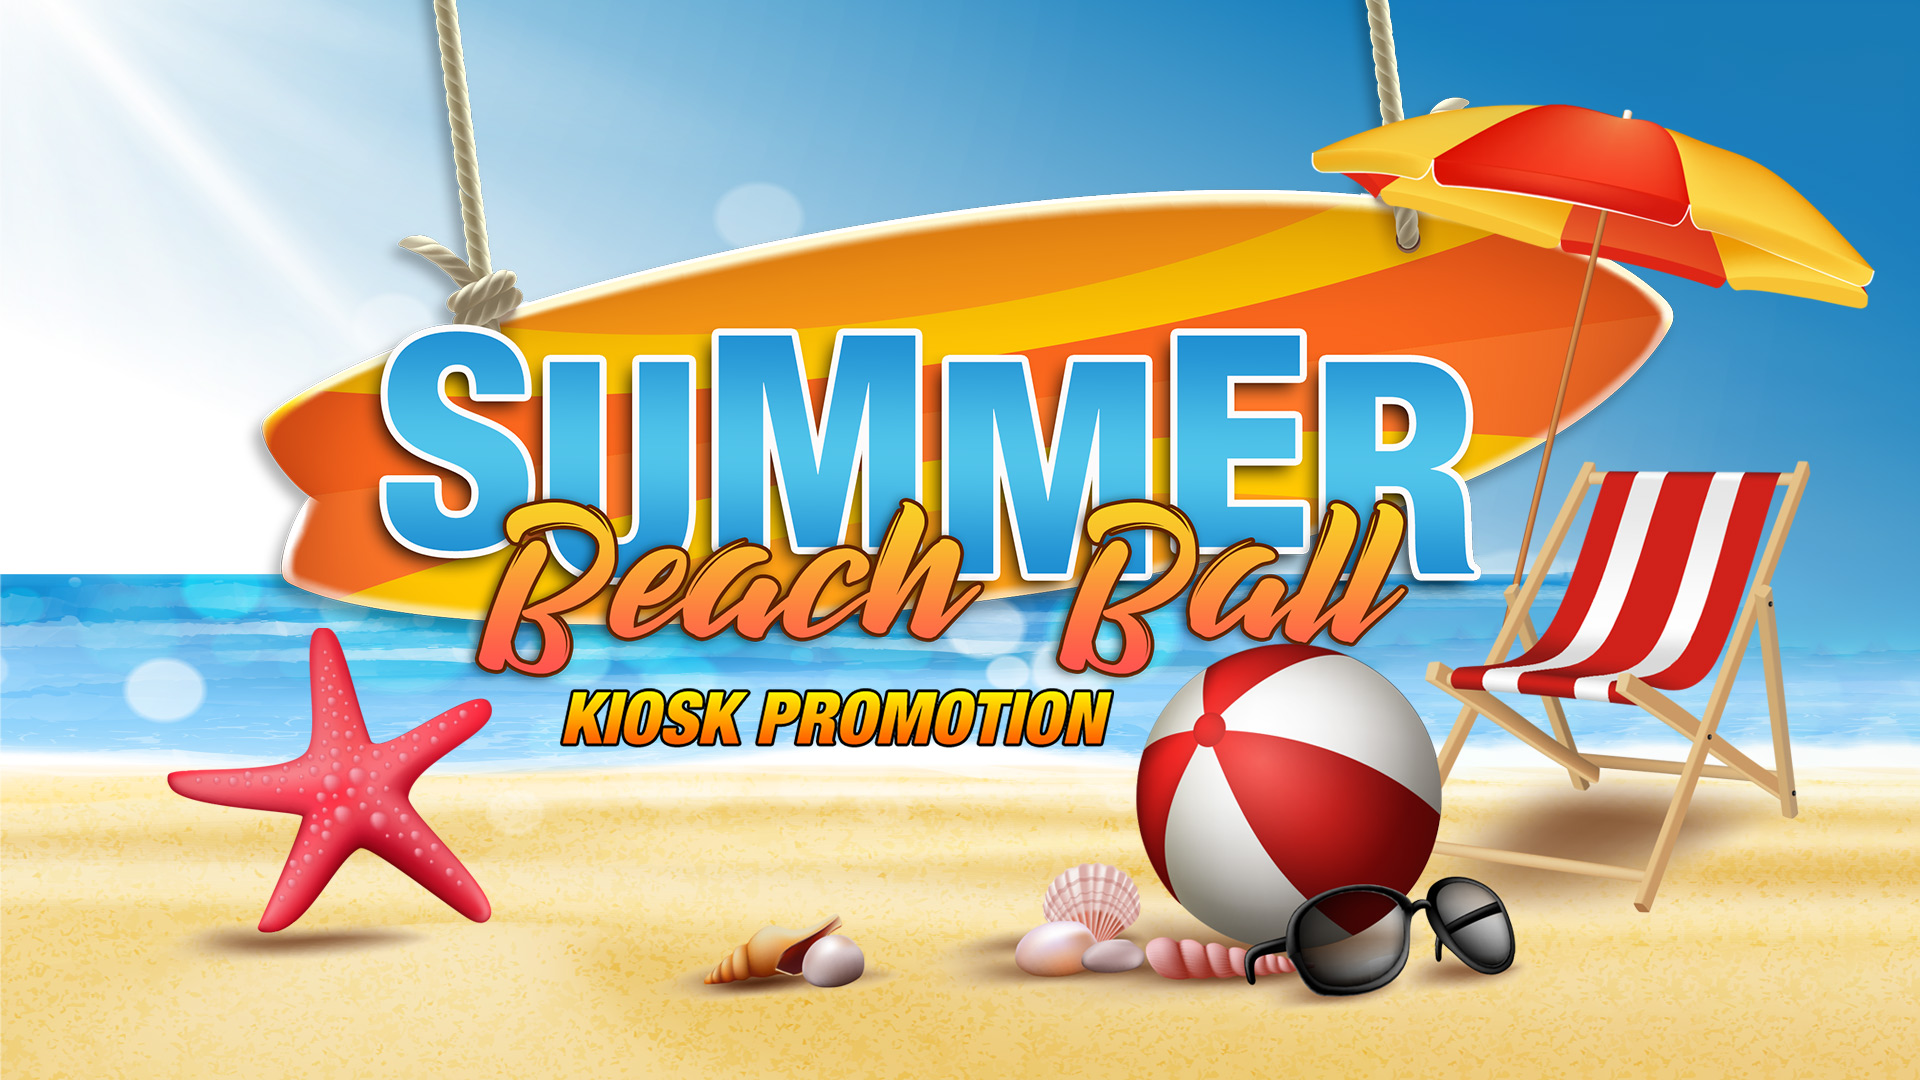 SUMMER BEACH BALL – KIOSK PROMOTION